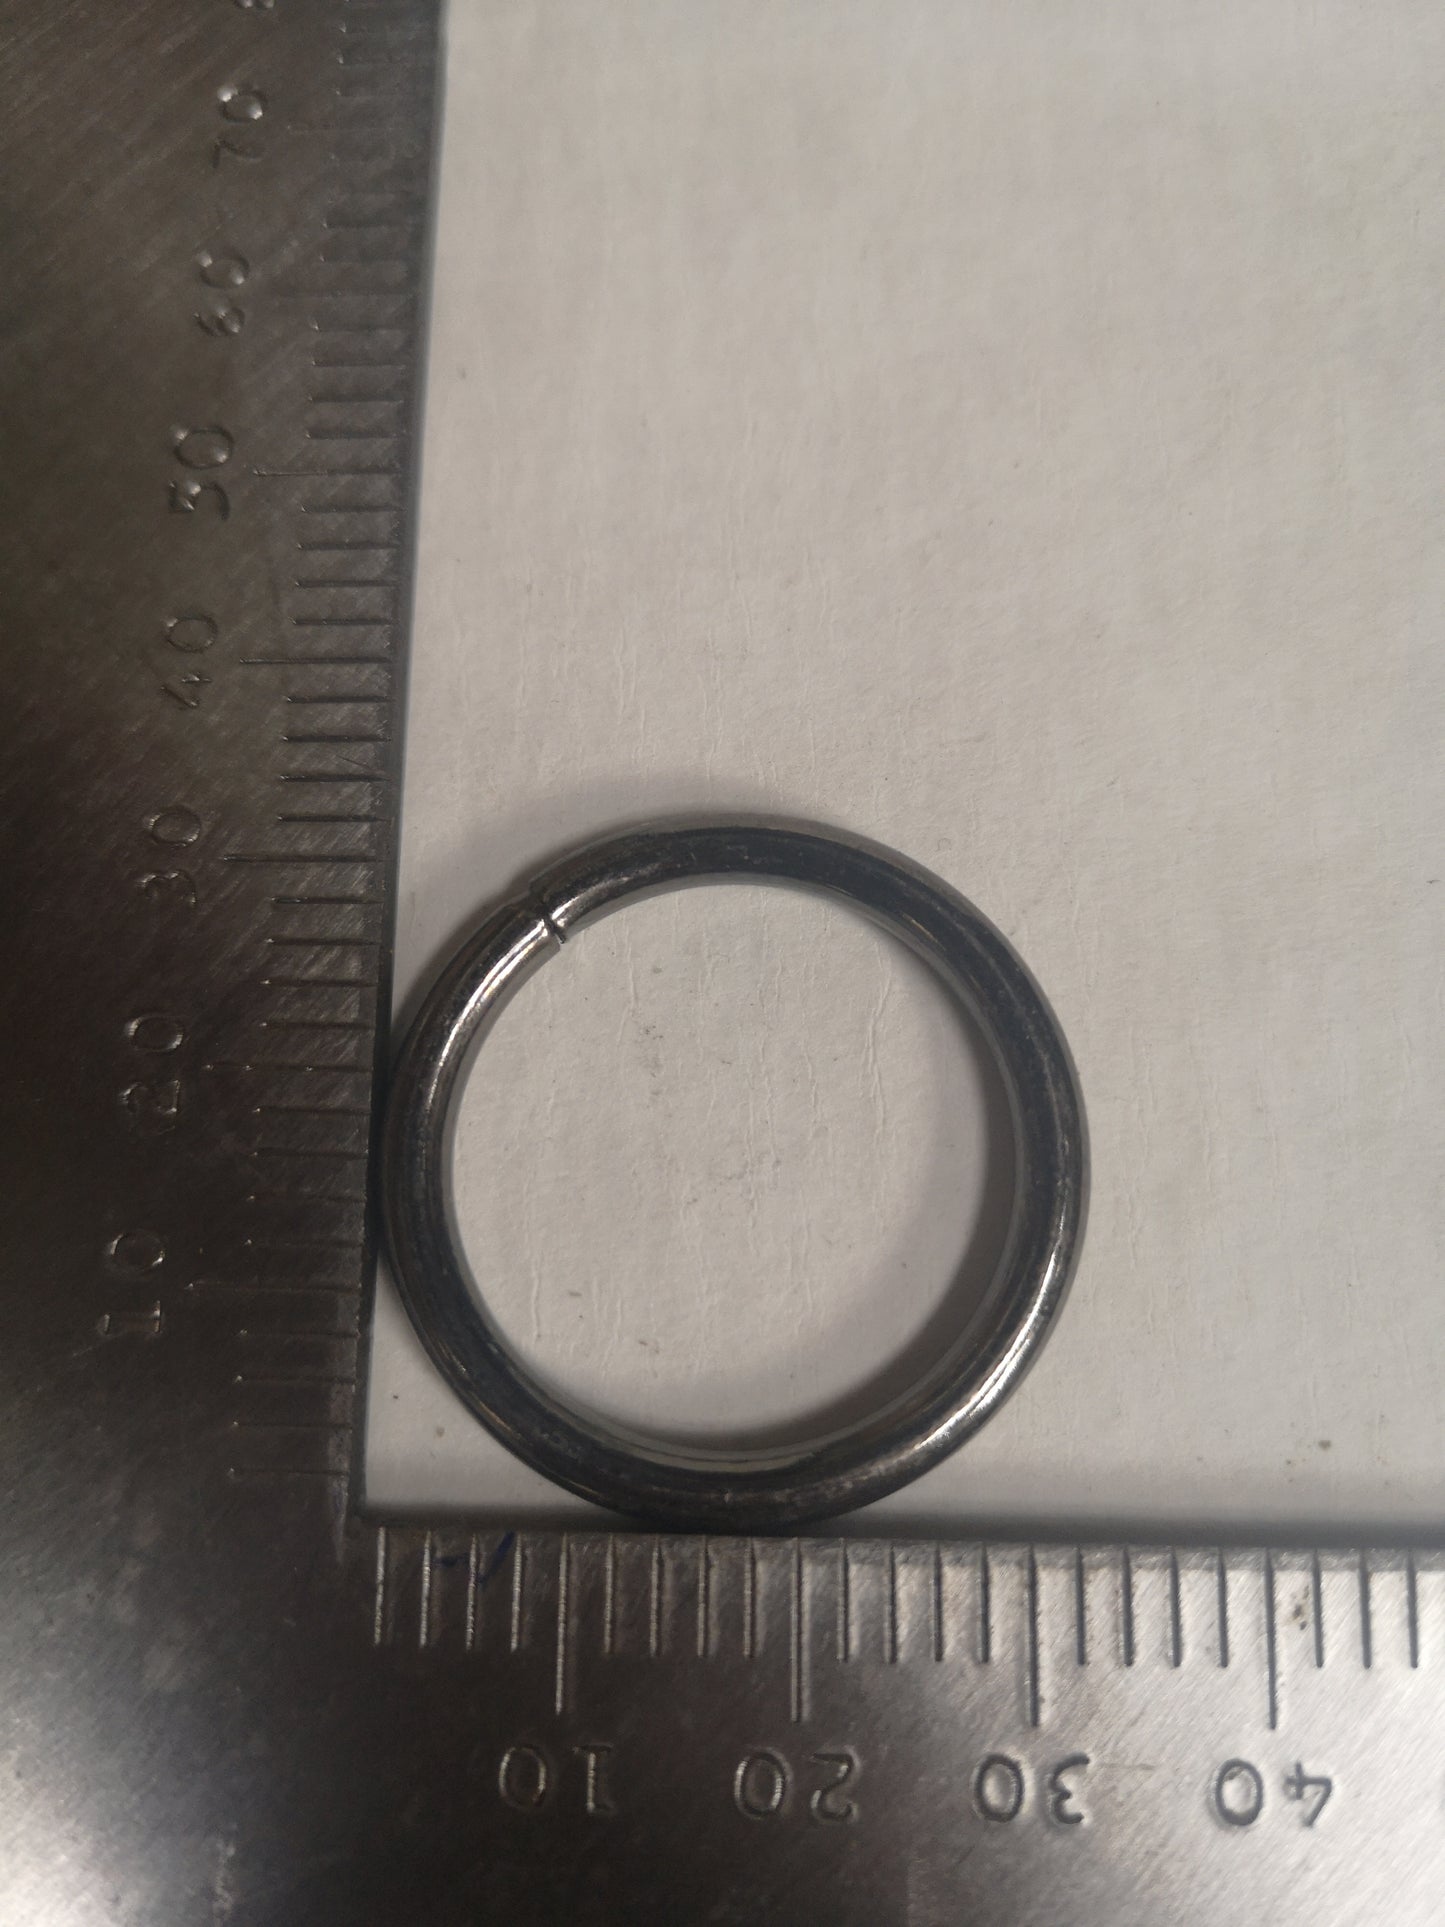 Small Metal Ring